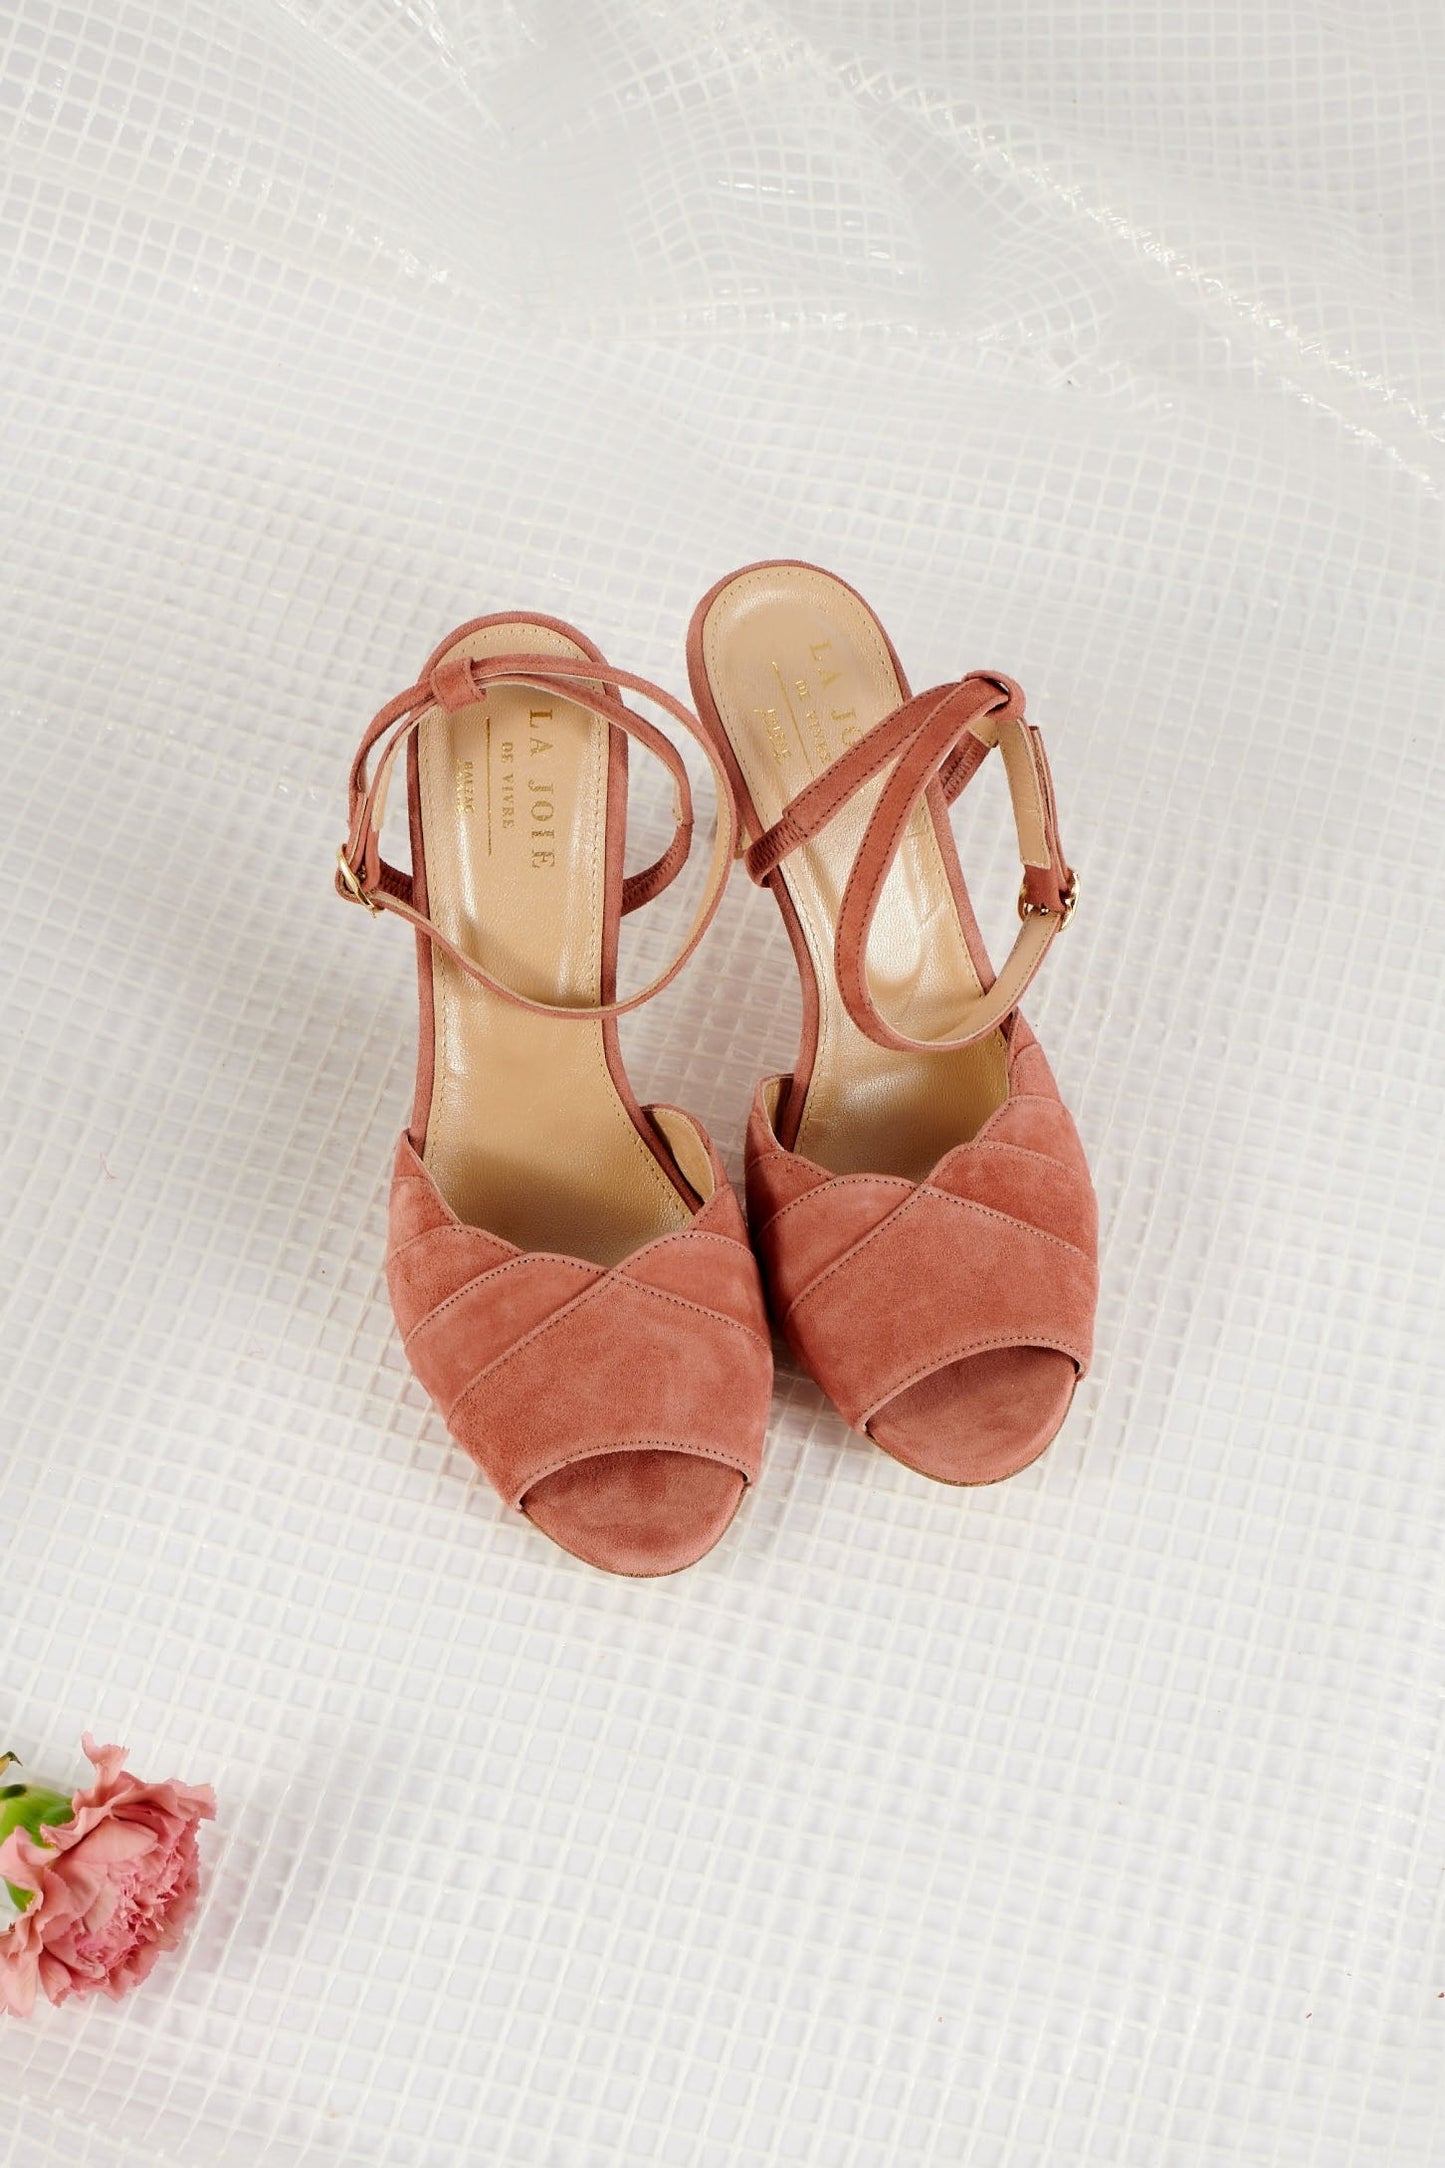 Make-up pink Maëlle sandals